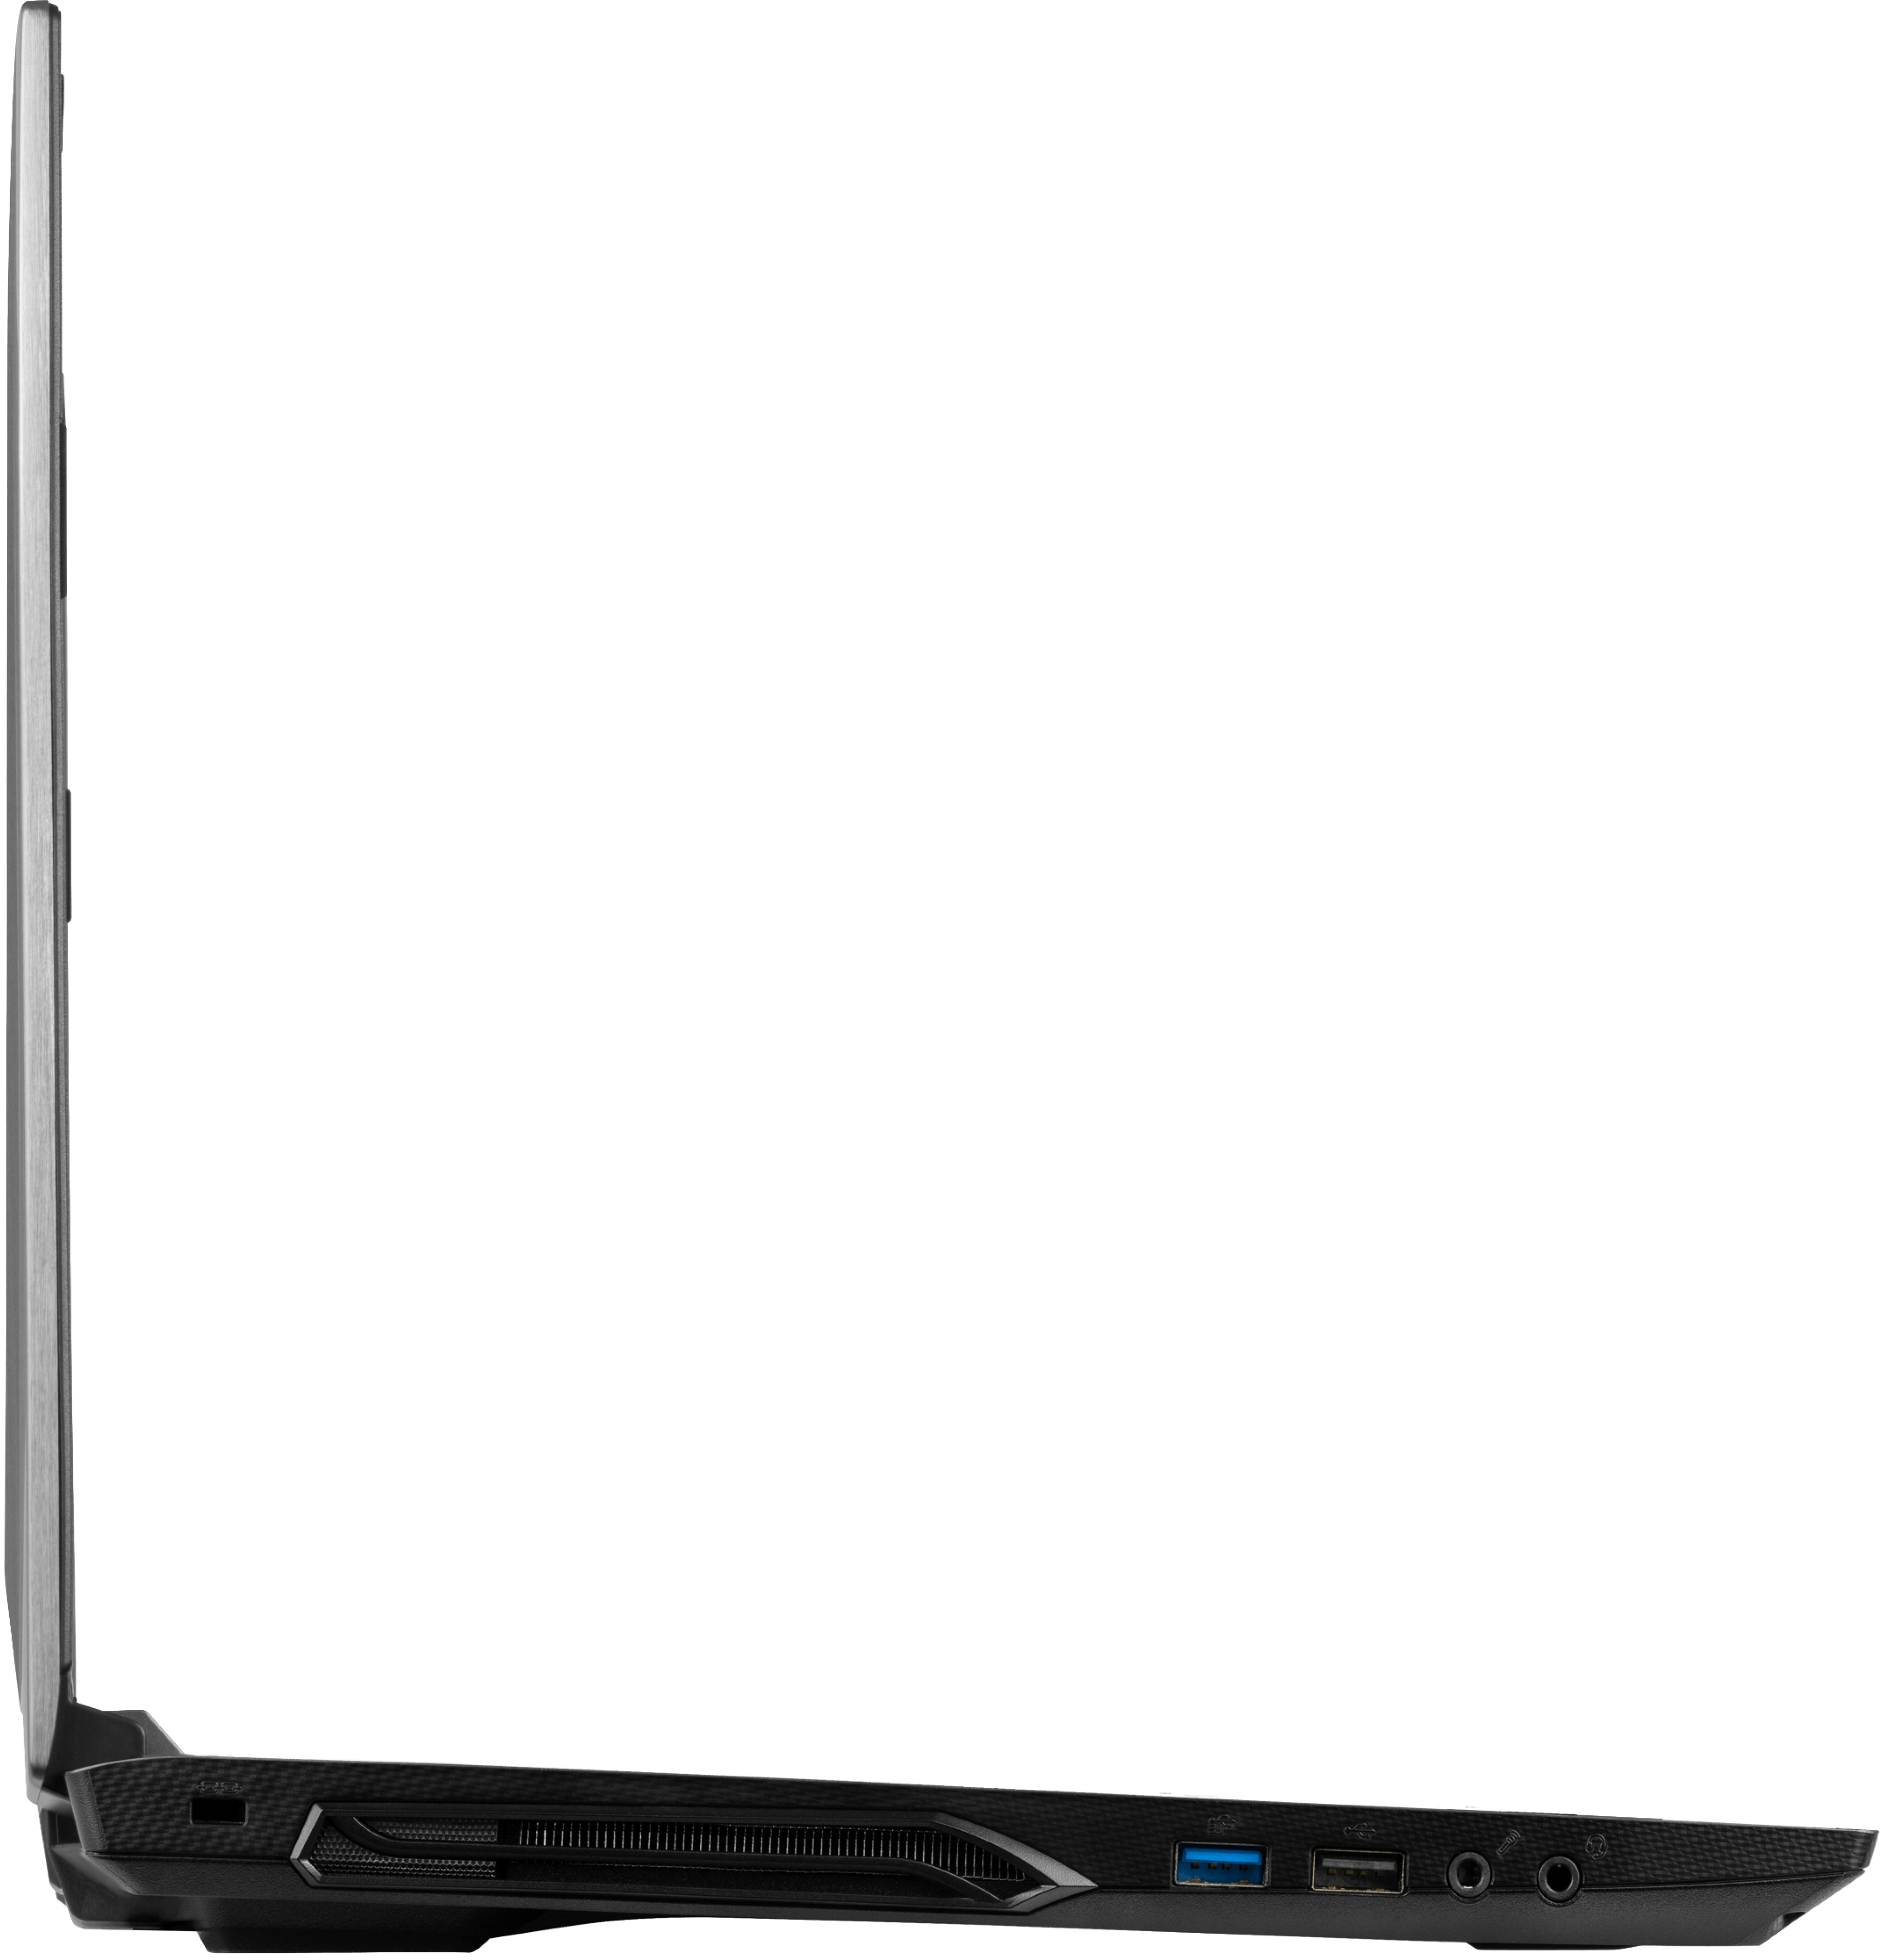 A left profile view of the Gazelle laptop’s ports, namely Kensington Lock, USB, mic, & audio jack.